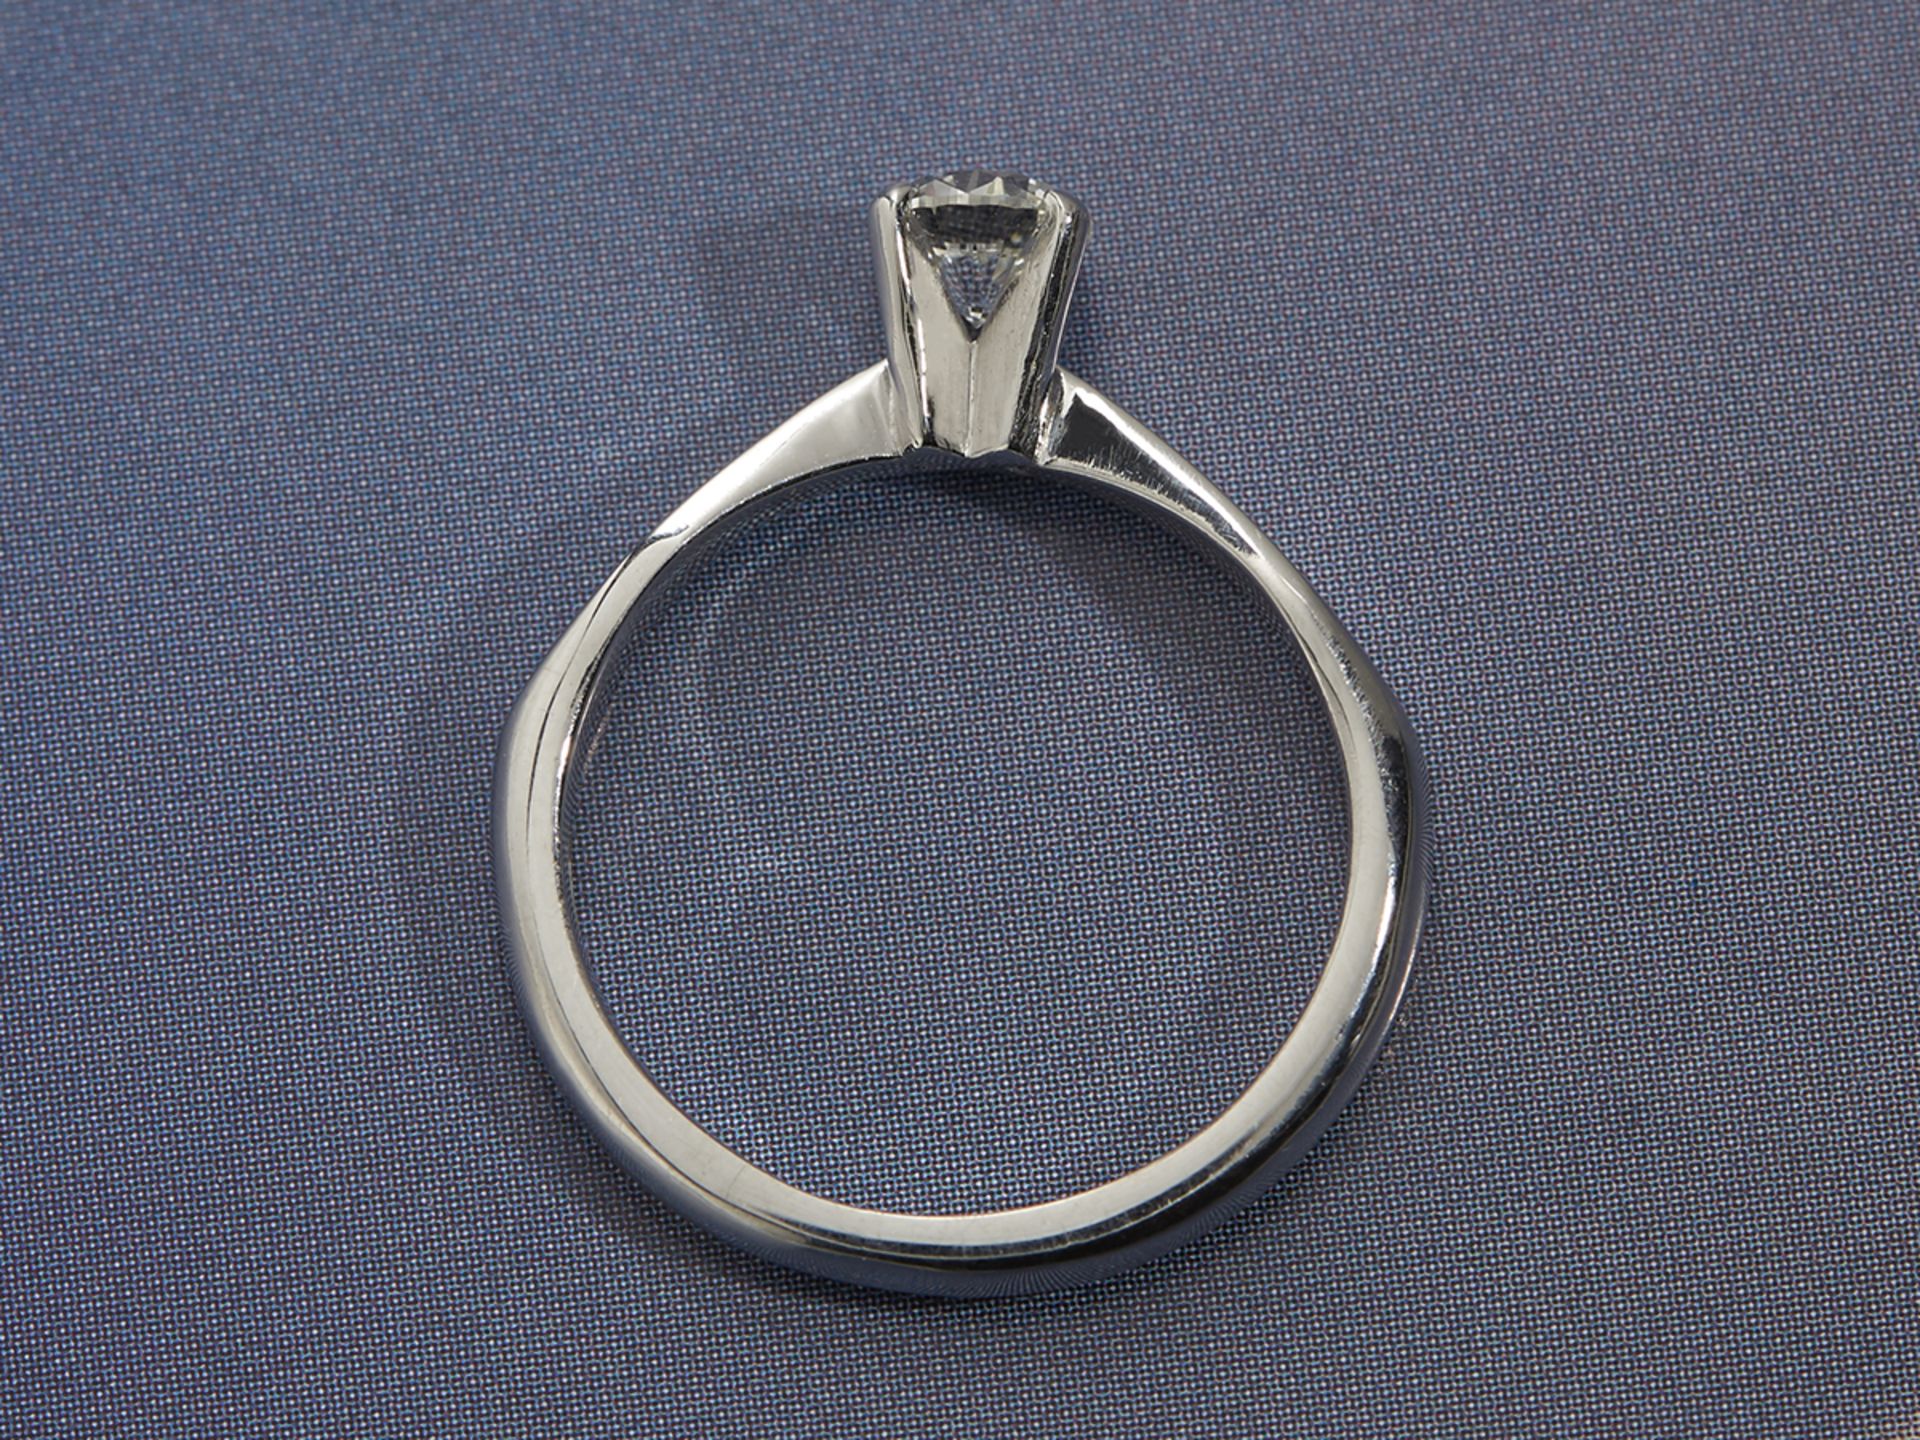 18k White Gold Round Brilliant Cut 0.52ct Diamond Ring - Image 6 of 6